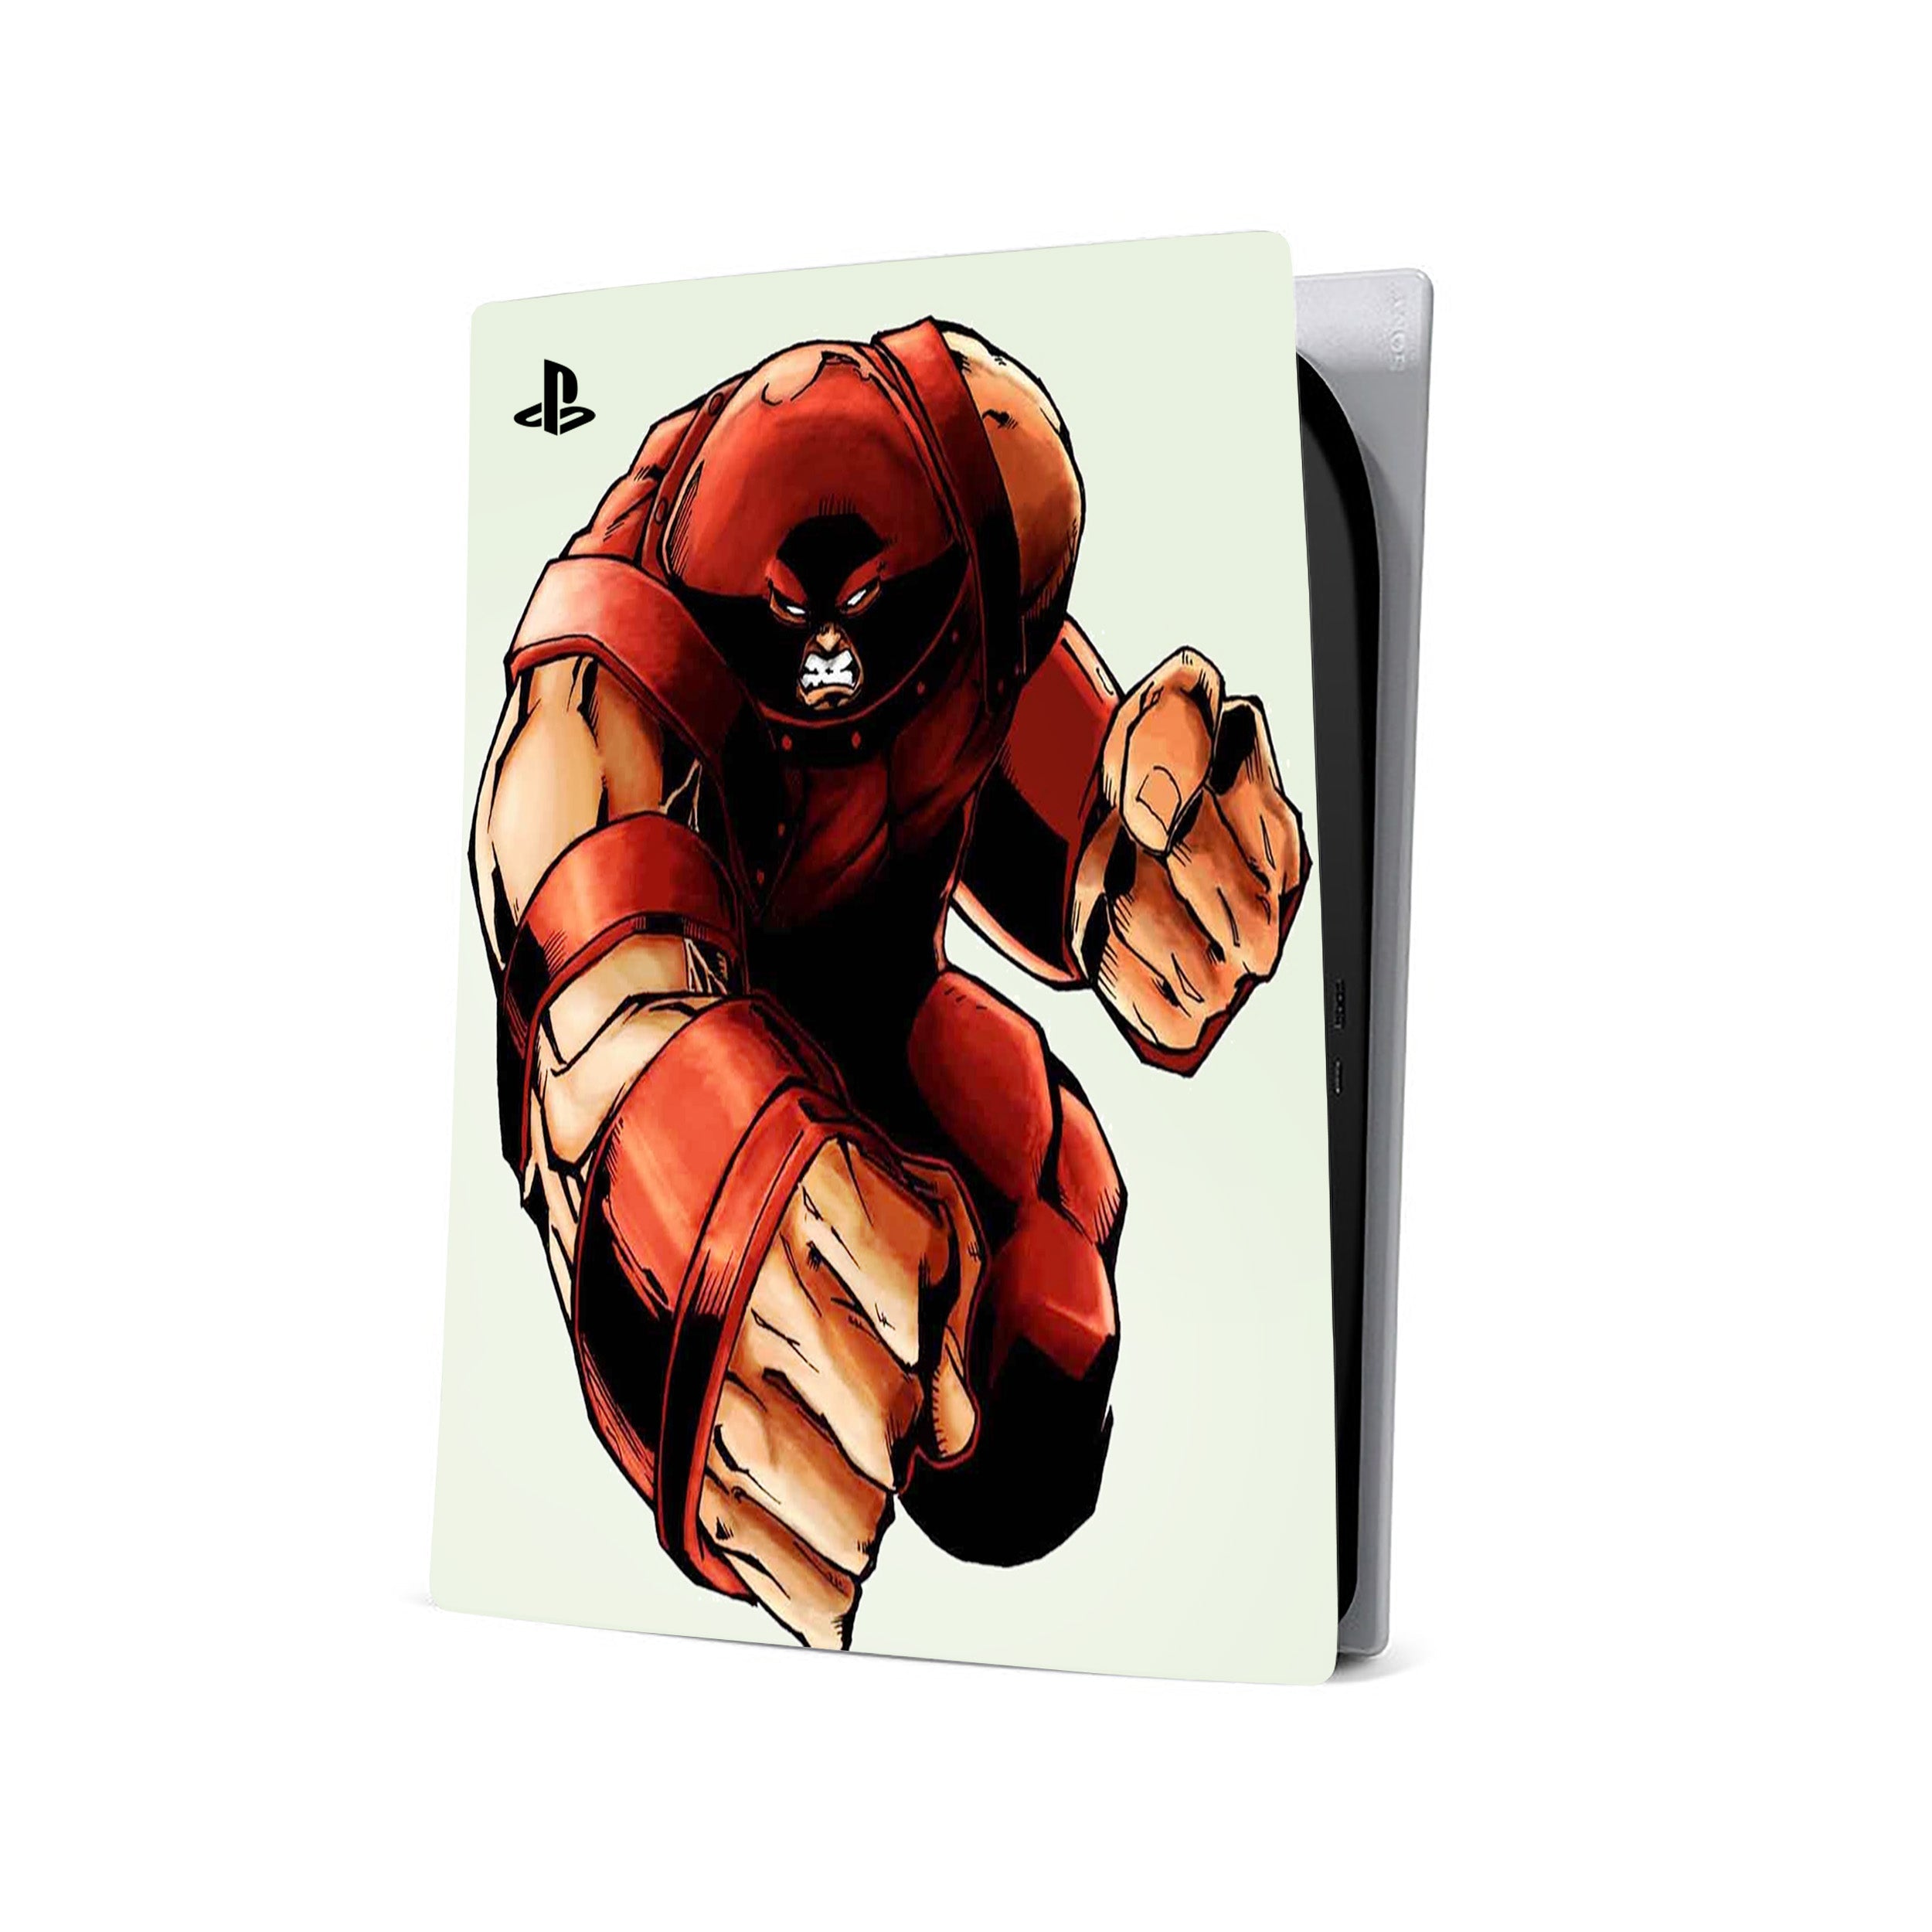 A video game skin featuring a Marvel Comics X Men Juggernaut design for the PS5.